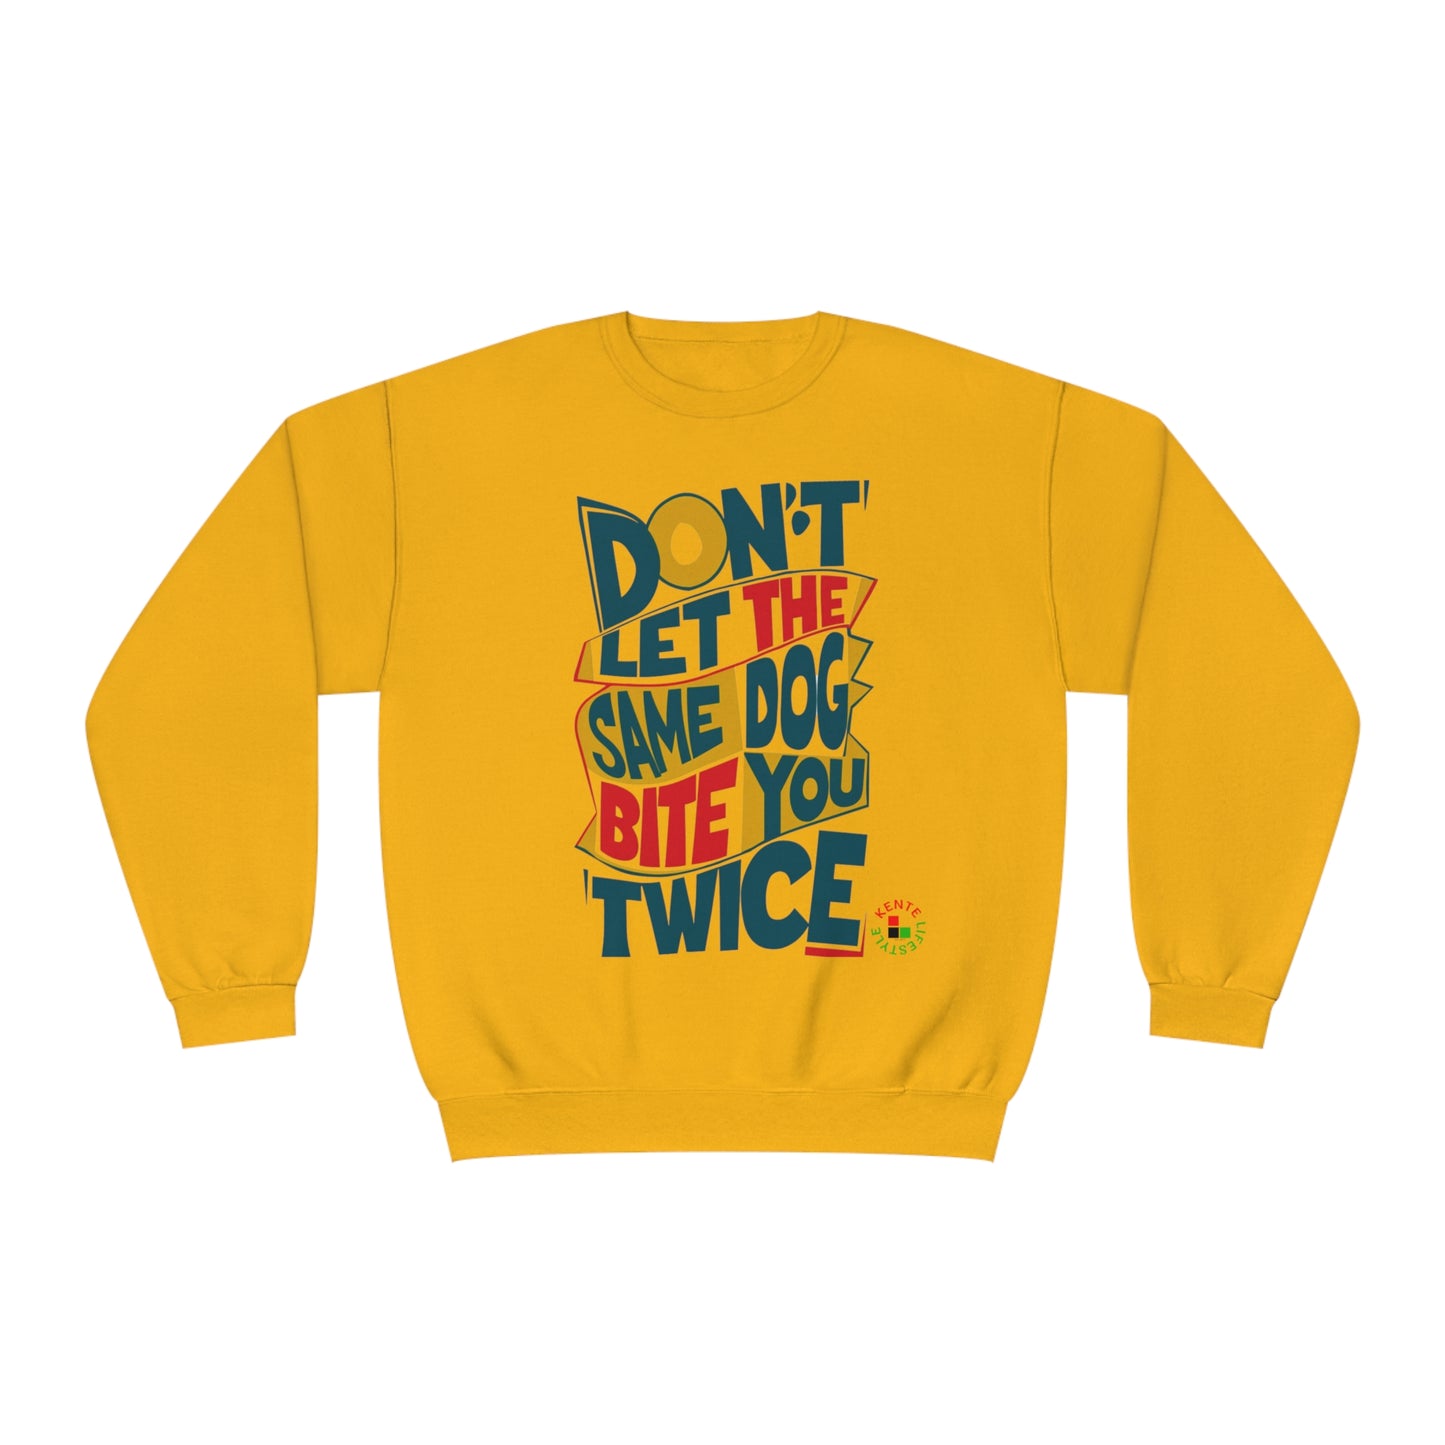 "Don't Let the Same Dog Bite You Twice" - Sweatshirt